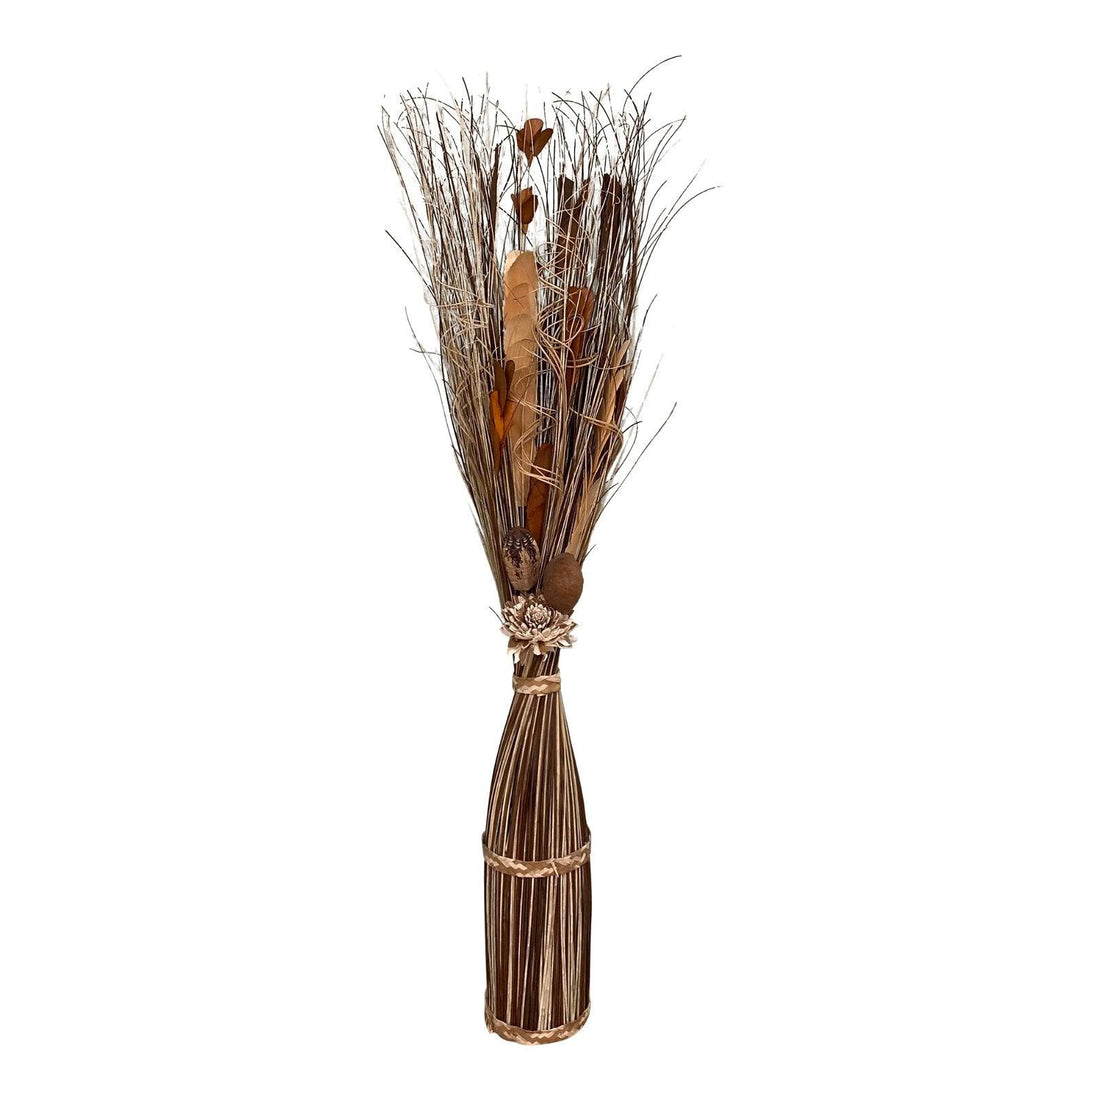 Twisted Stem Vase With Dried Brown & Cream Flowers - £49.99 - Flower Sprays 